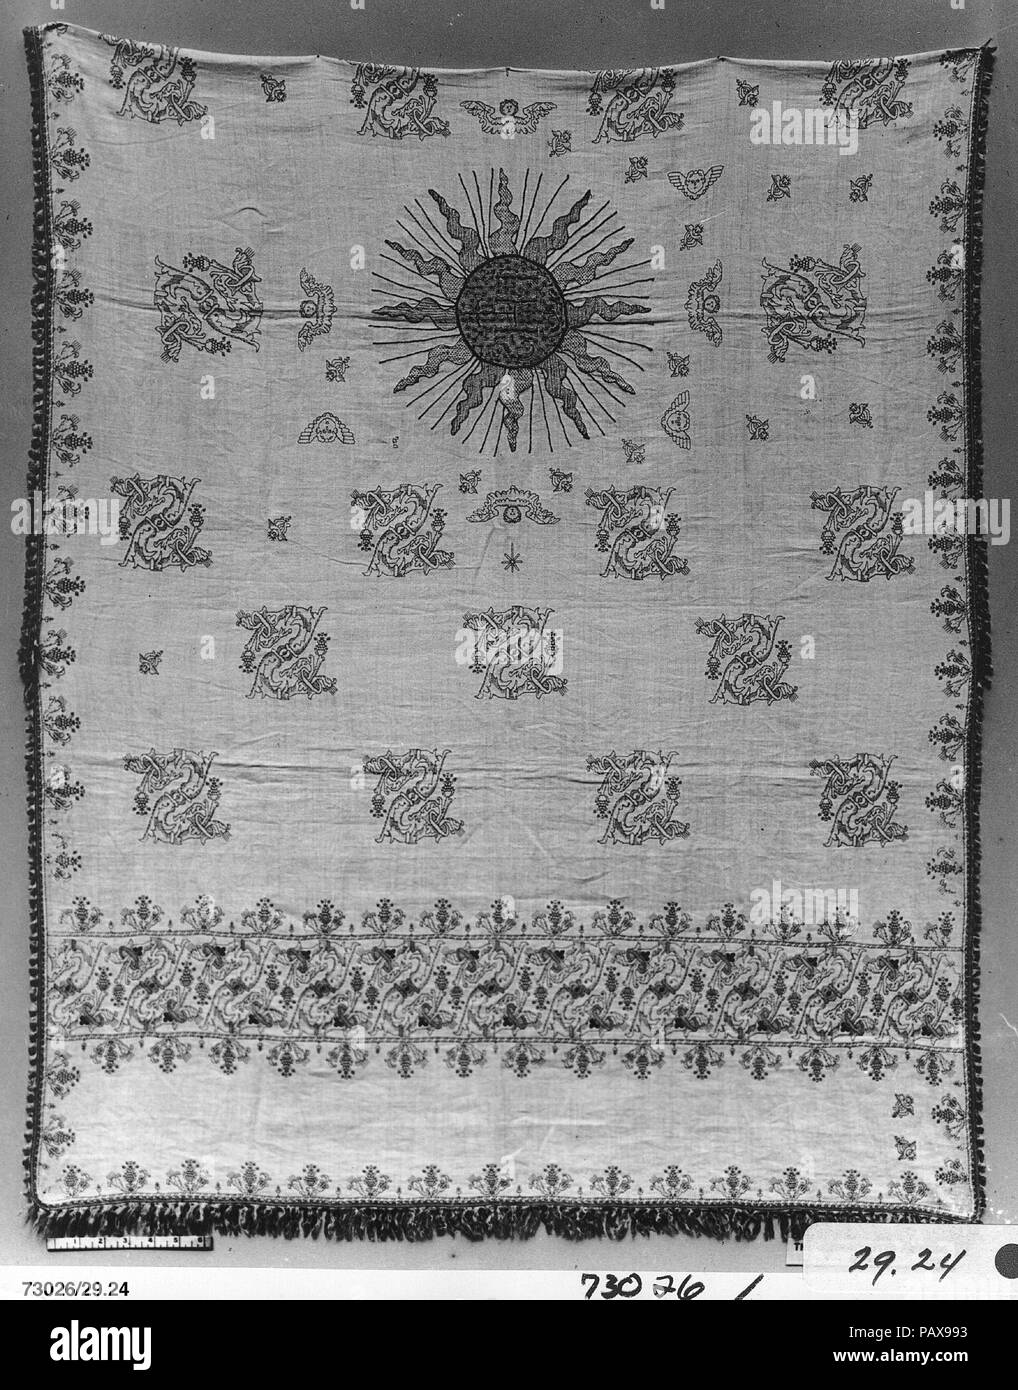 Altar cloth. Culture: Italian. Dimensions: L. 77 x W. 39 1/2 inches (195.6 x 100.3 cm). Date: 16th century. Museum: Metropolitan Museum of Art, New York, USA. Stock Photo